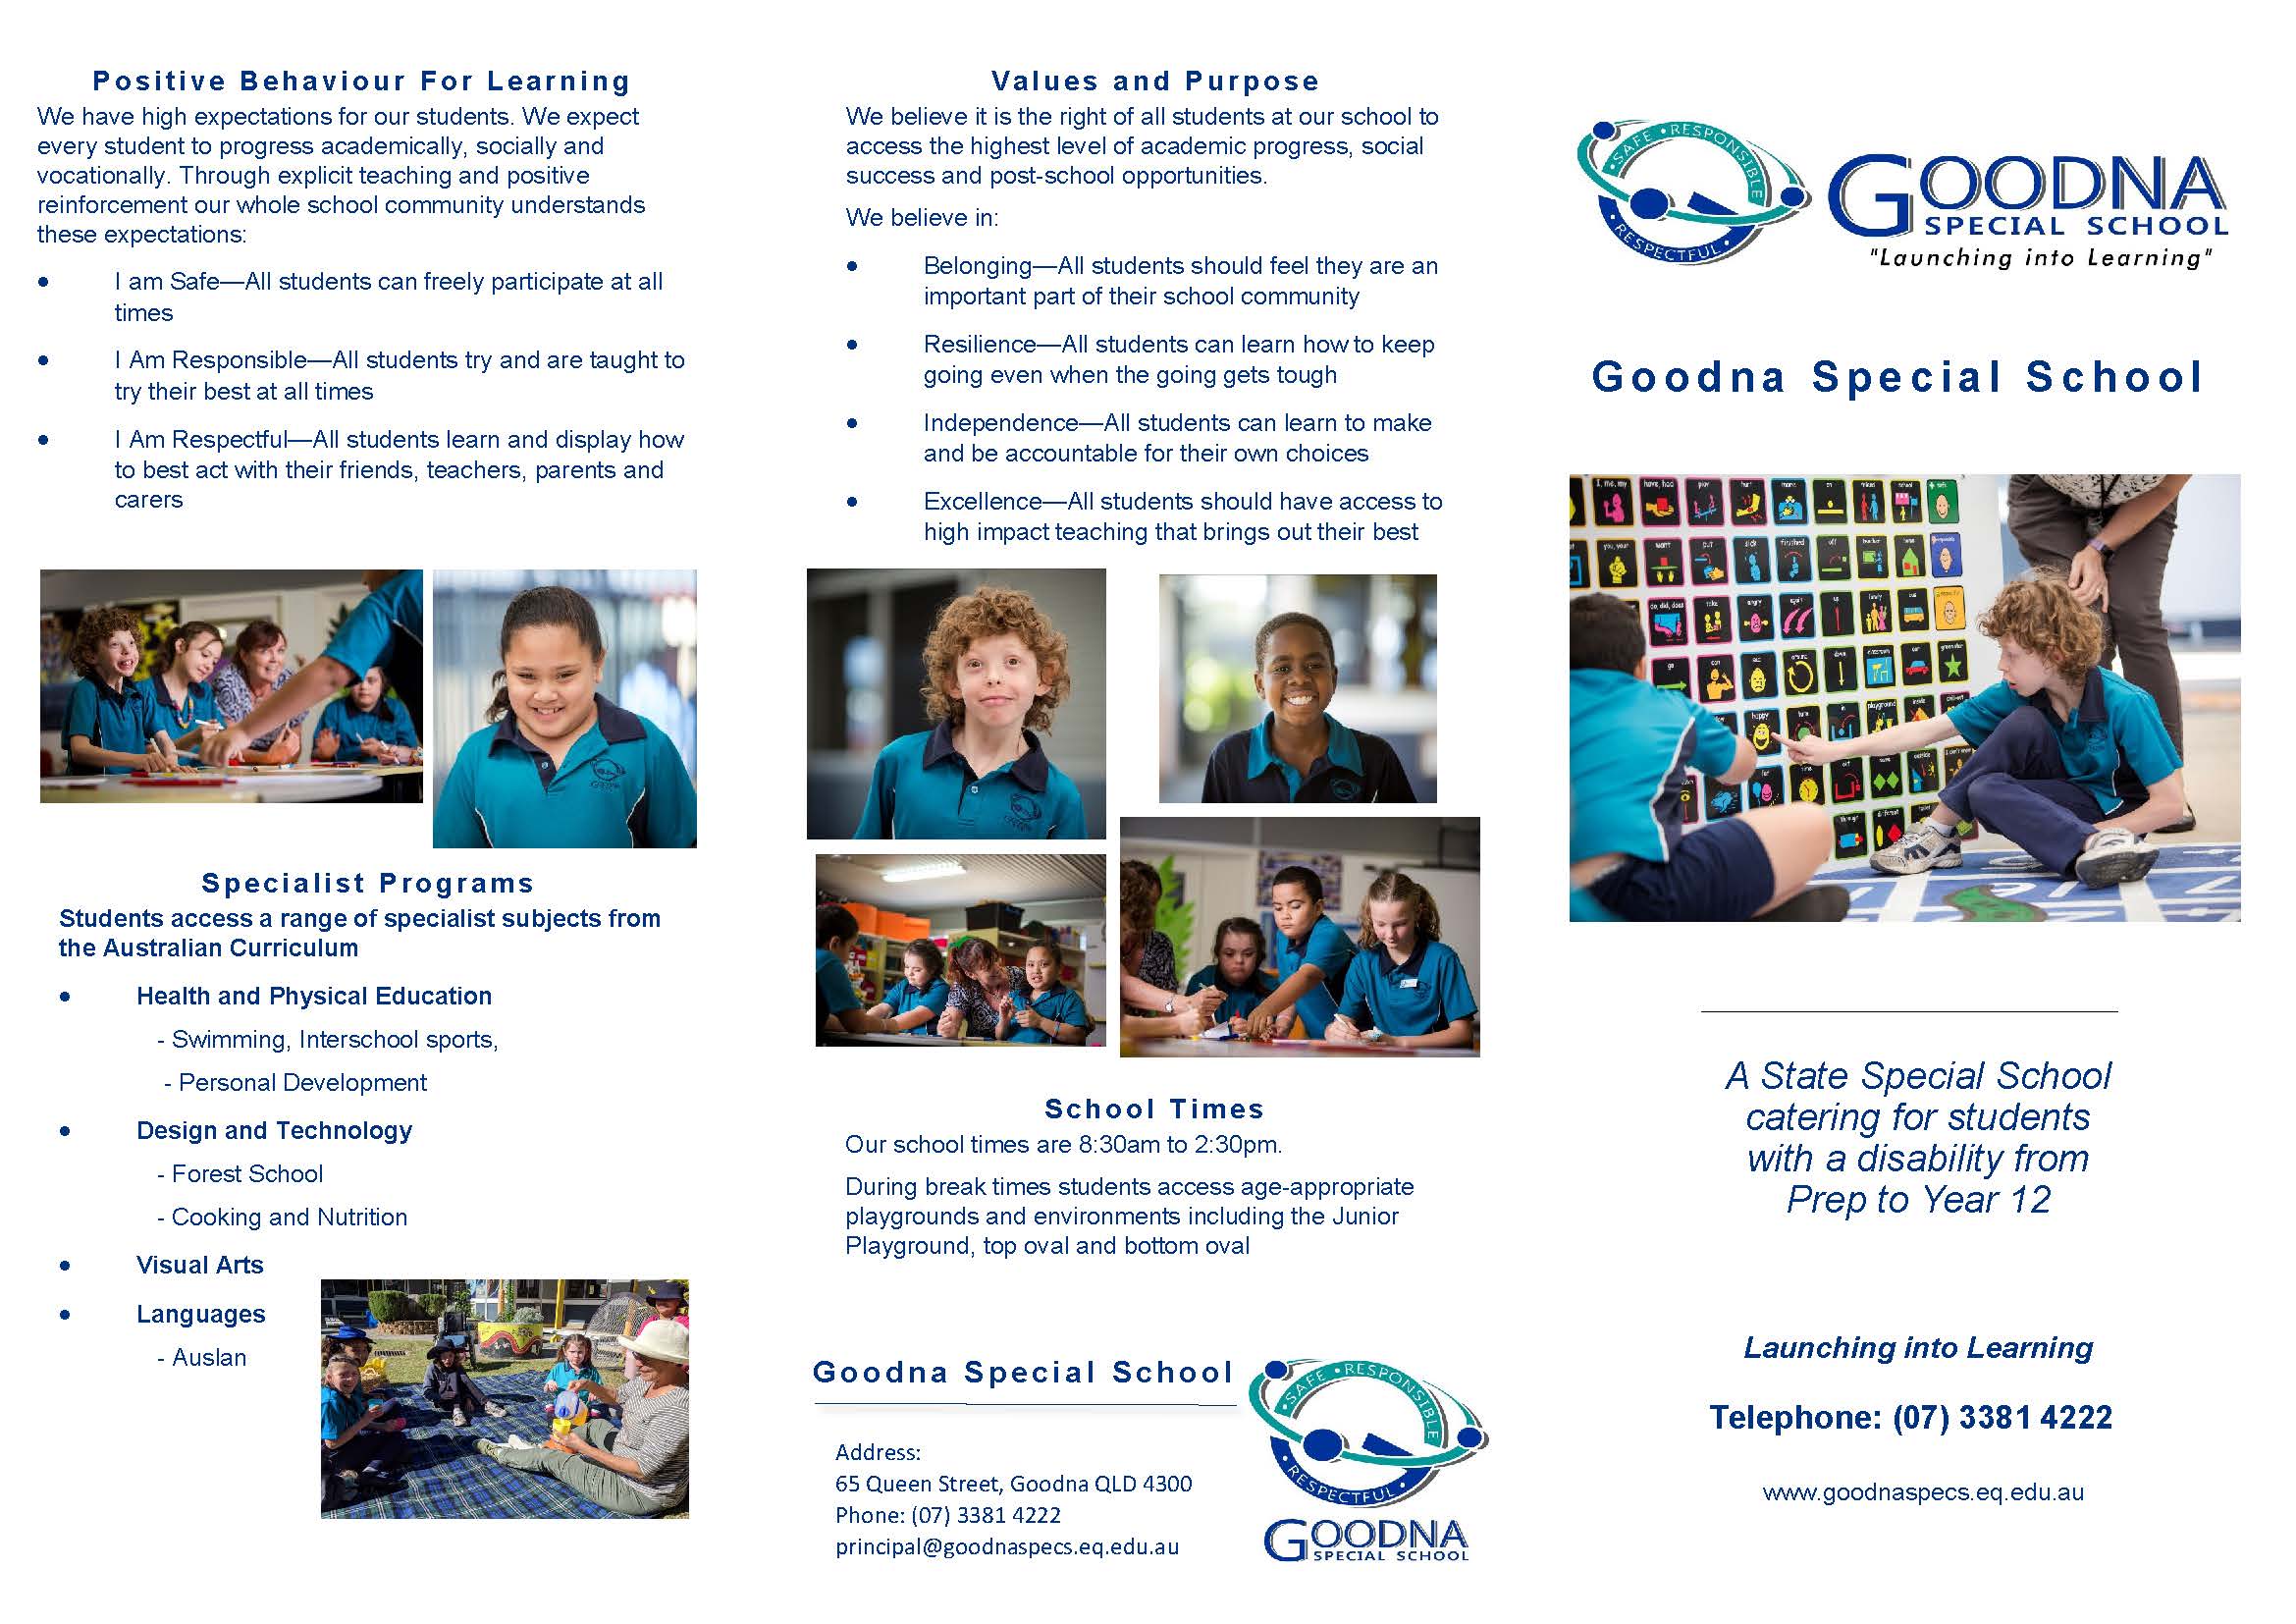 Goodna Special School BrochureF_Page_1.jpg